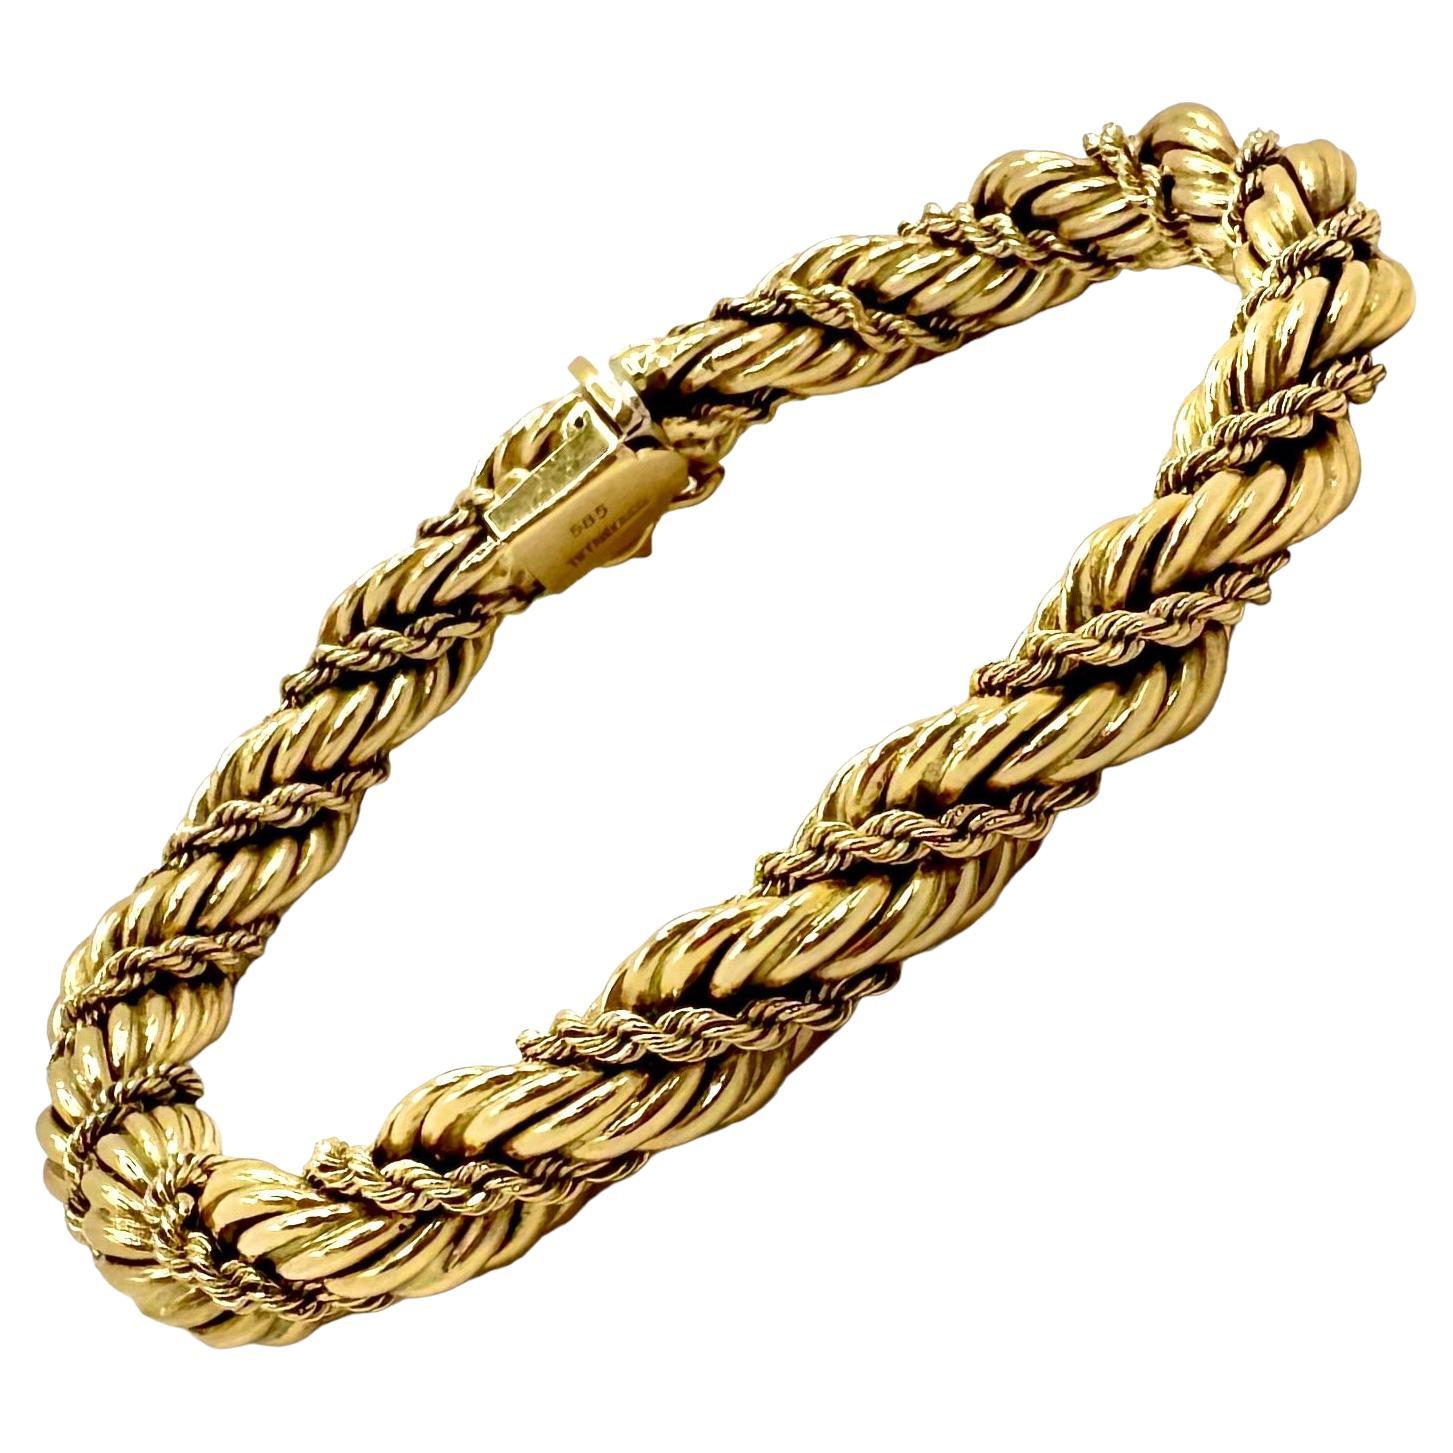 Tiffany & Co. 14K Yellow Gold Classic Rope Bracelet